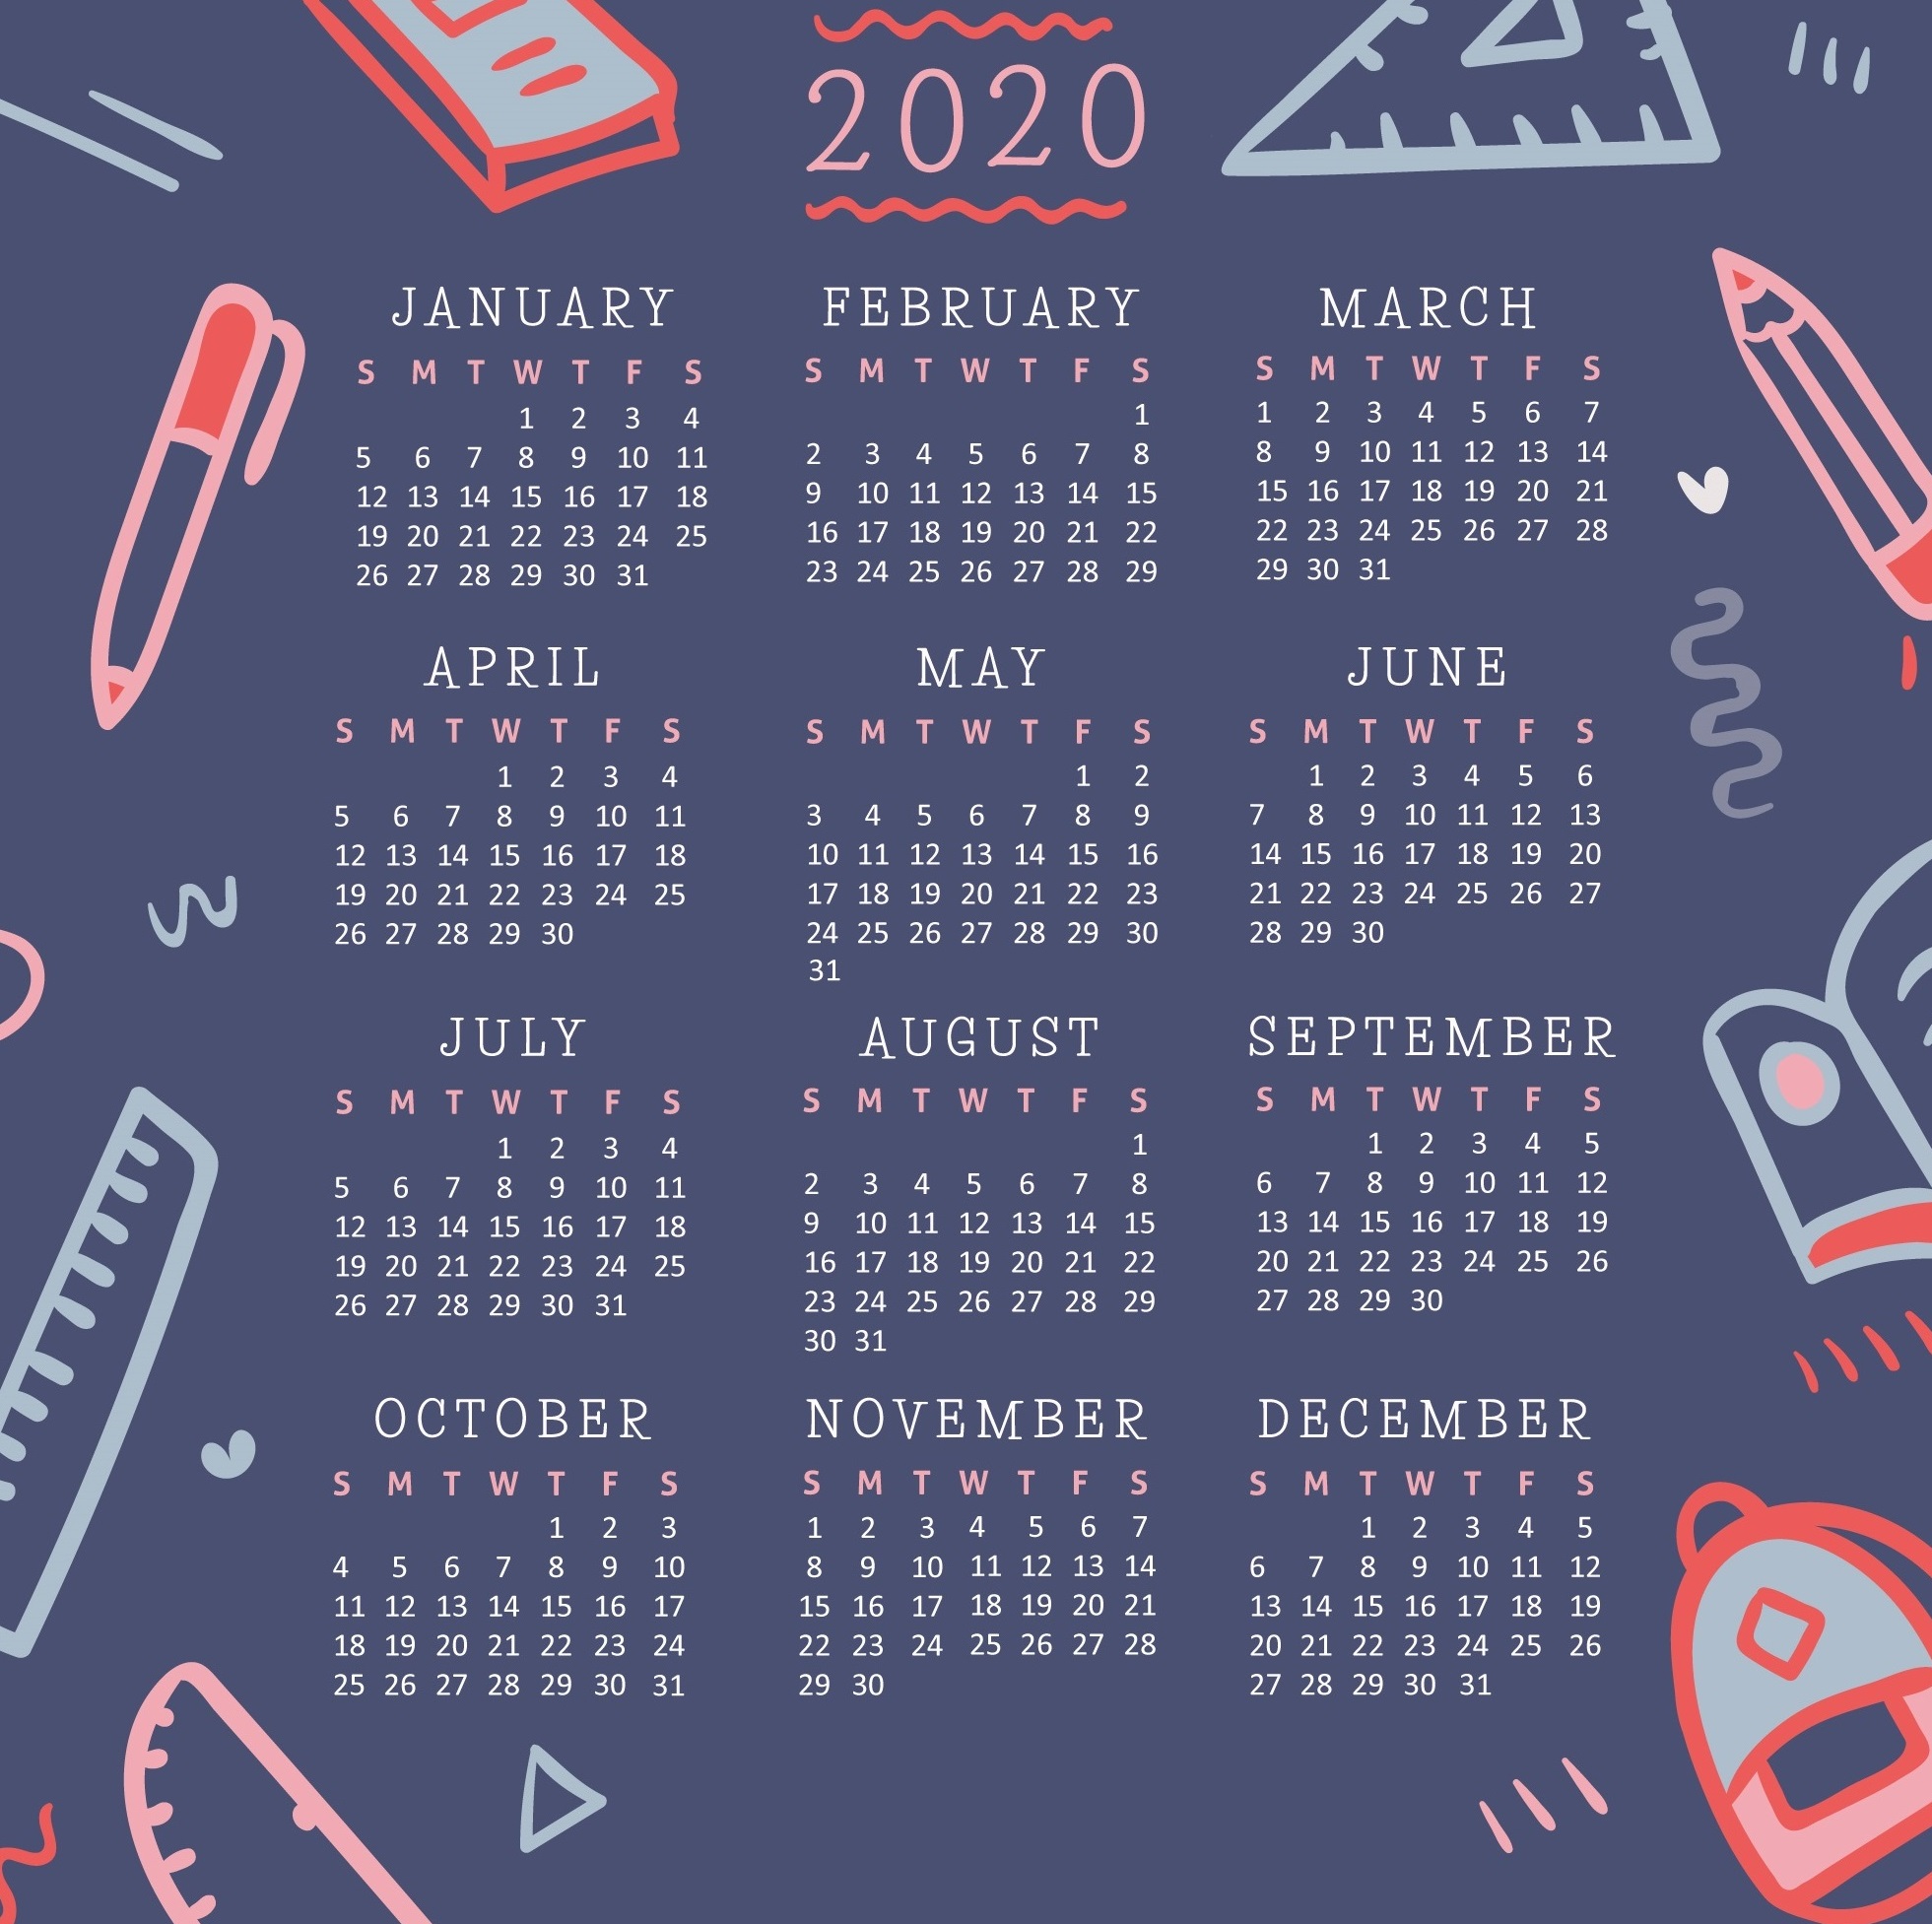 53] 2020 Calendar Phone Wallpapers on